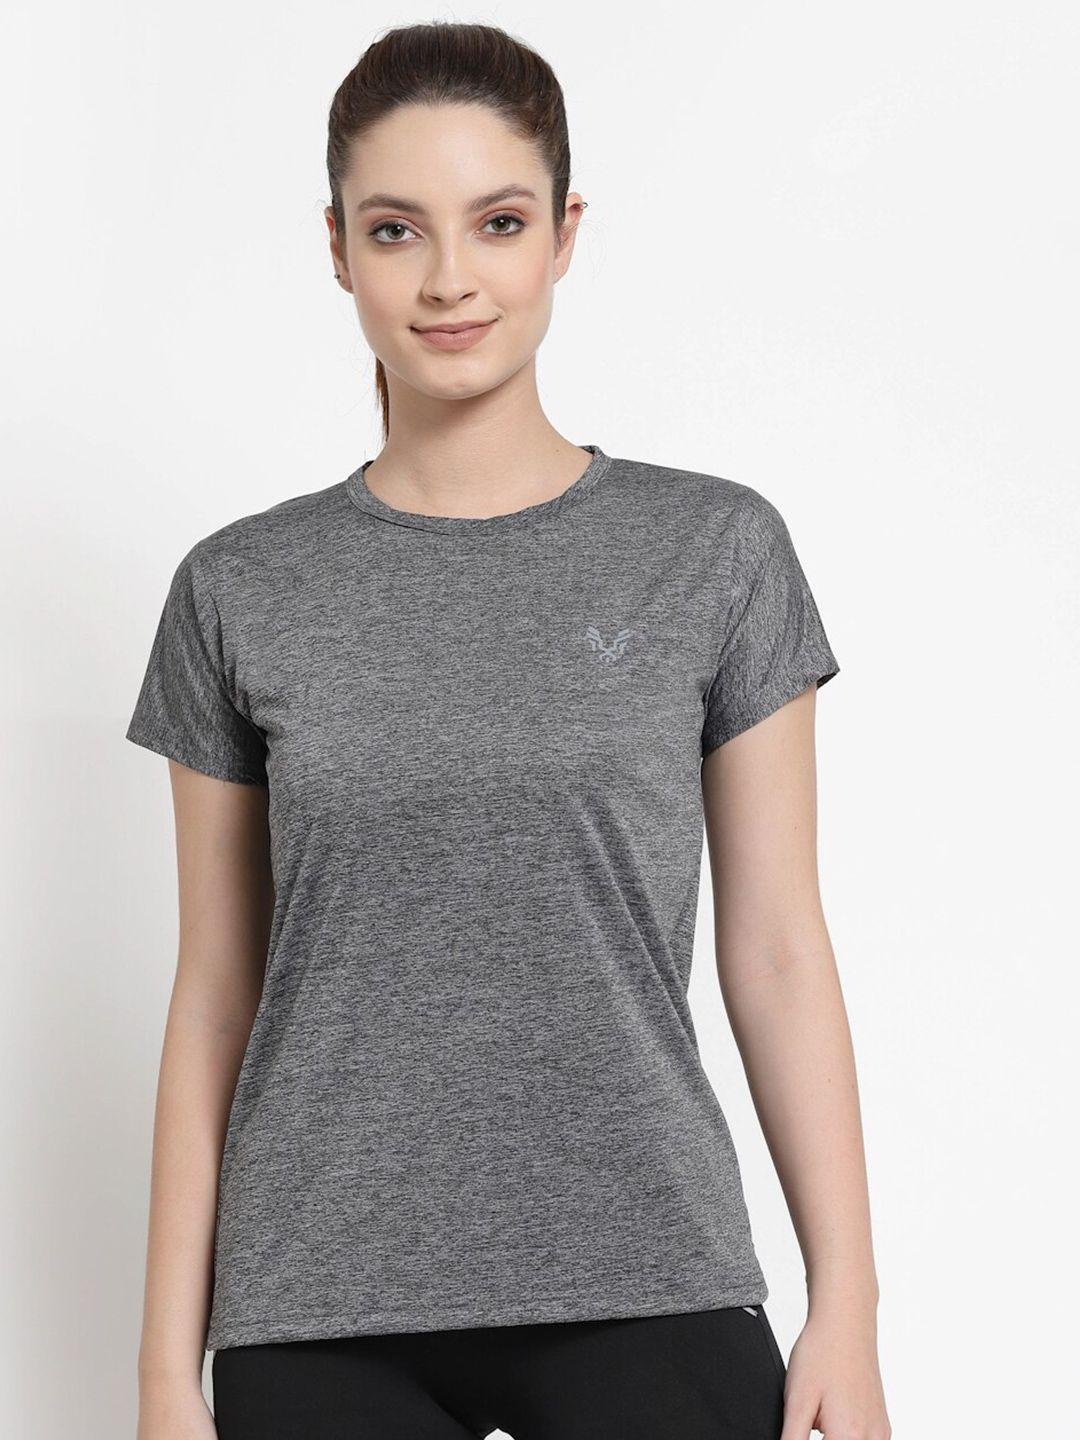 uzarus-short-sleeves-sports-gym-cotton-t-shirt